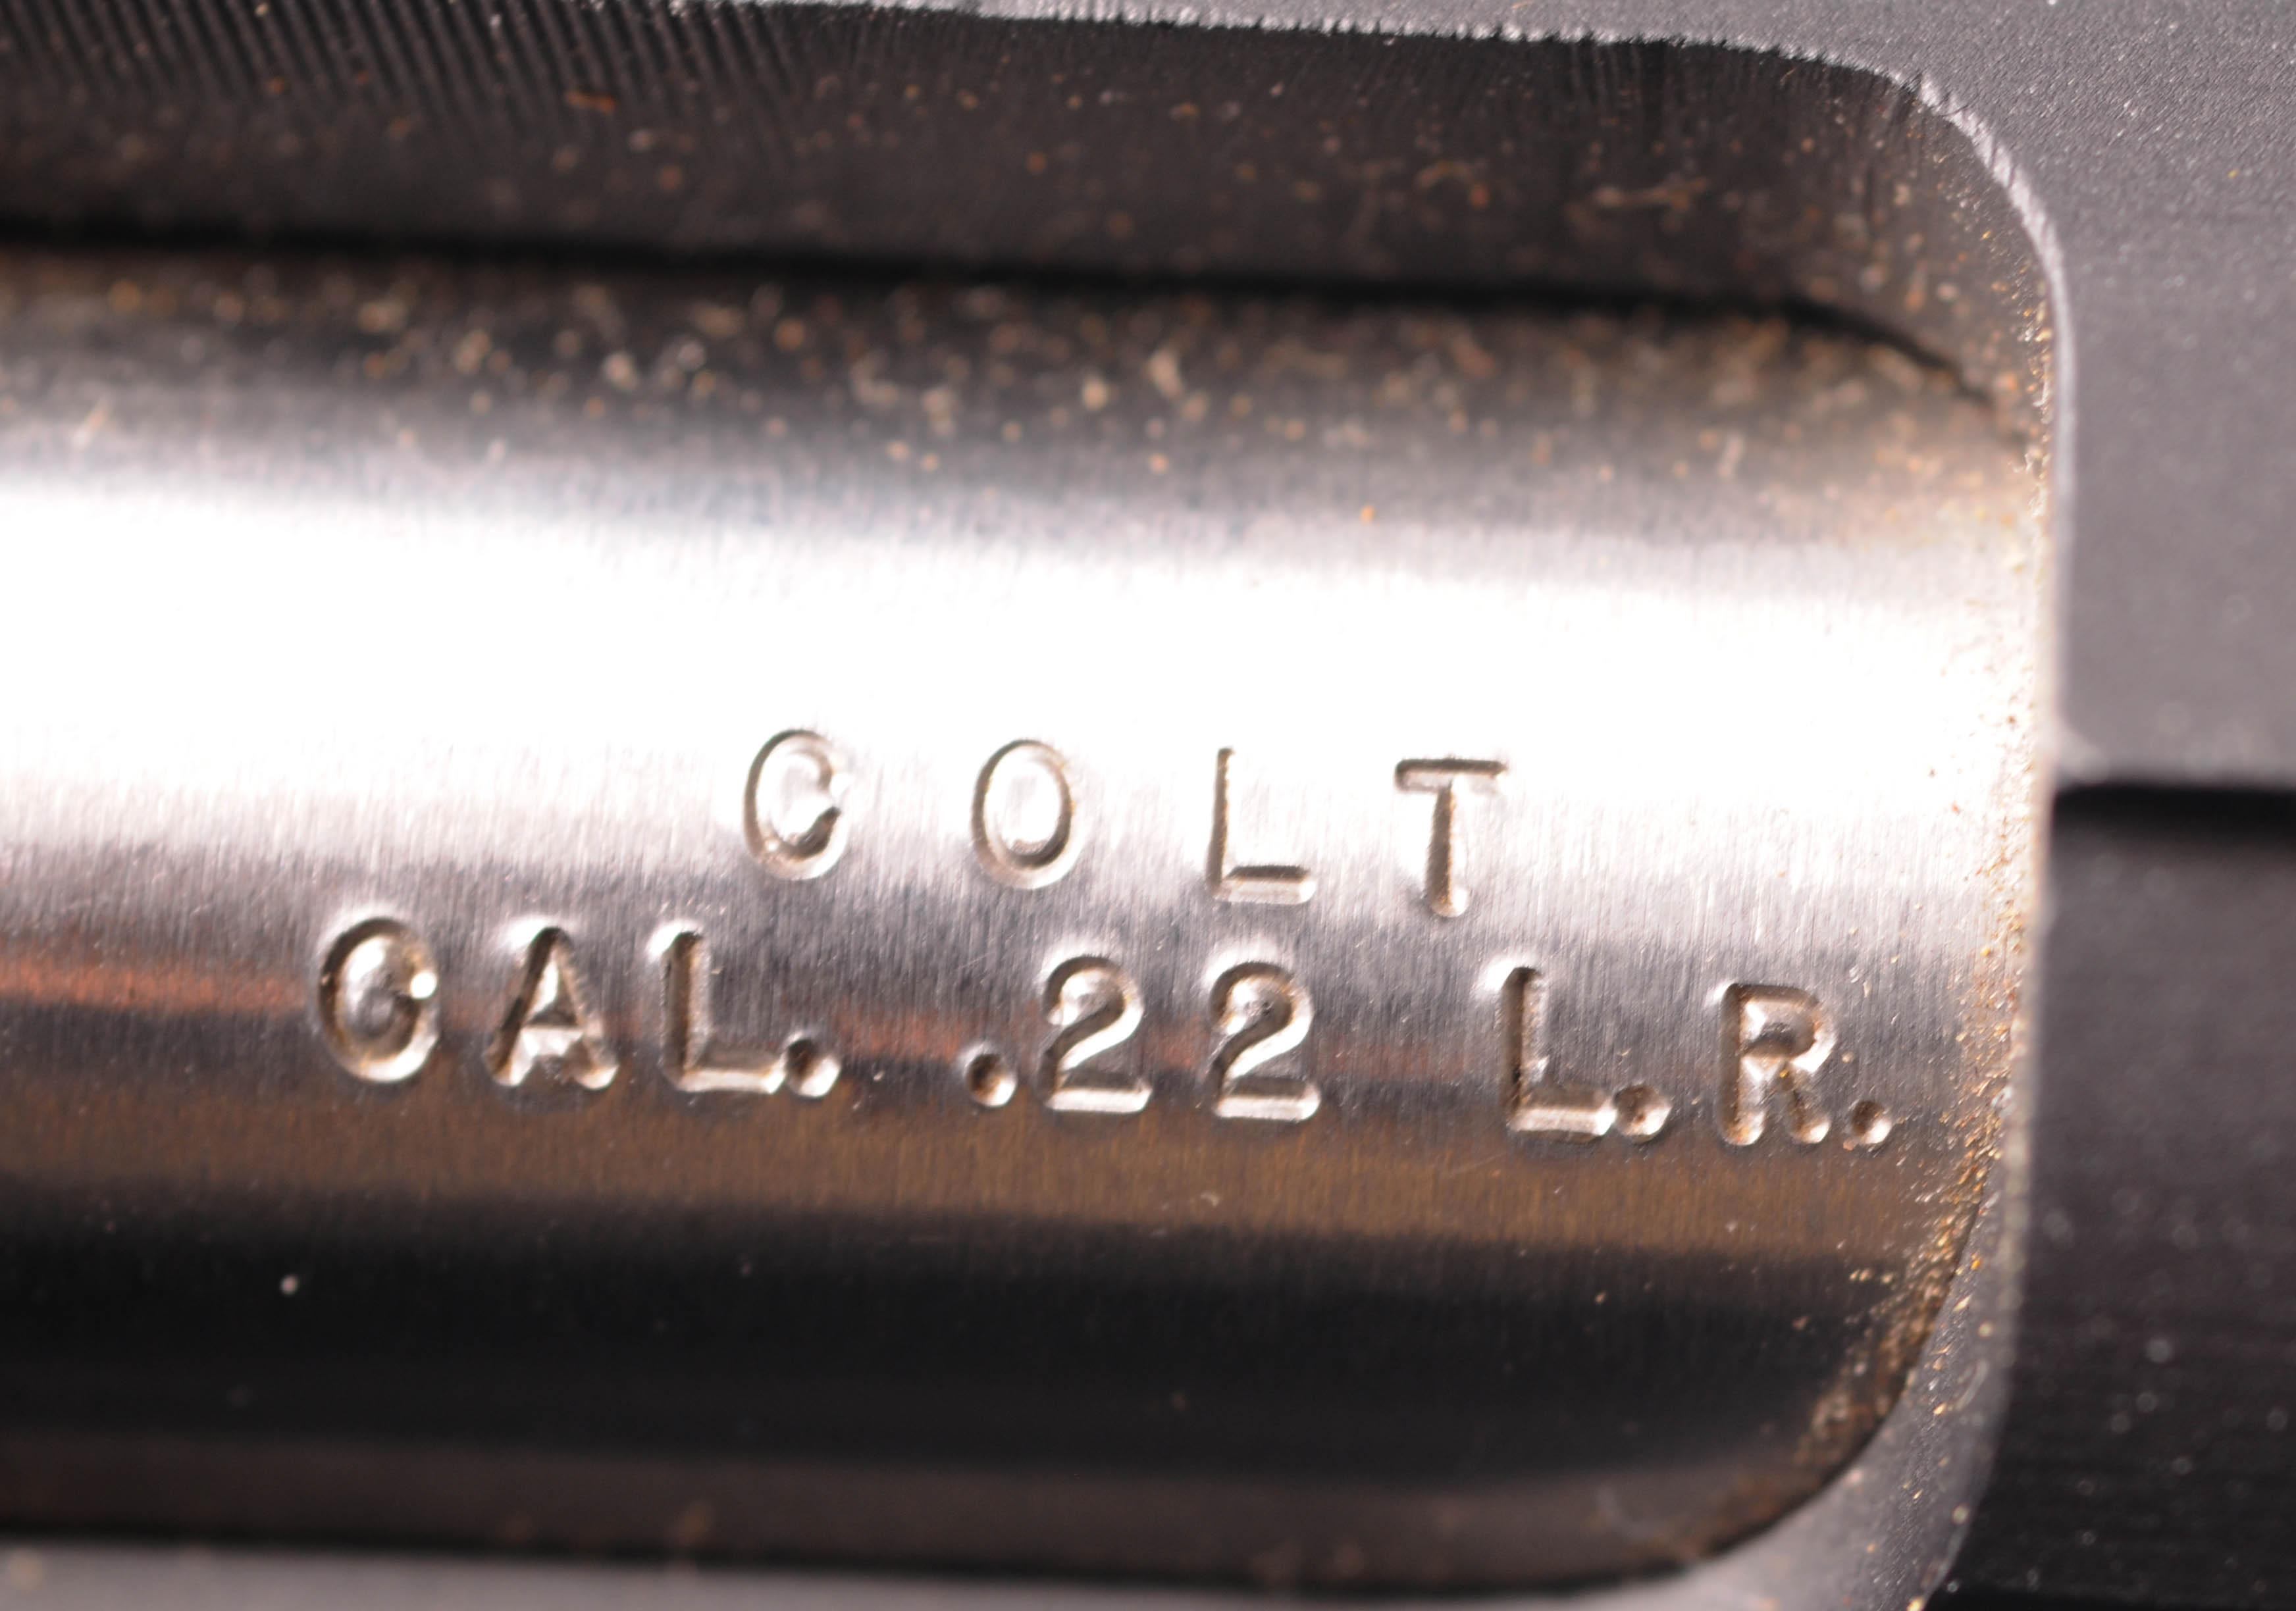 Colt Service Model .22 LR Ace Semi-Automatic Pistol - FFL #SM39140 (GEP 1)